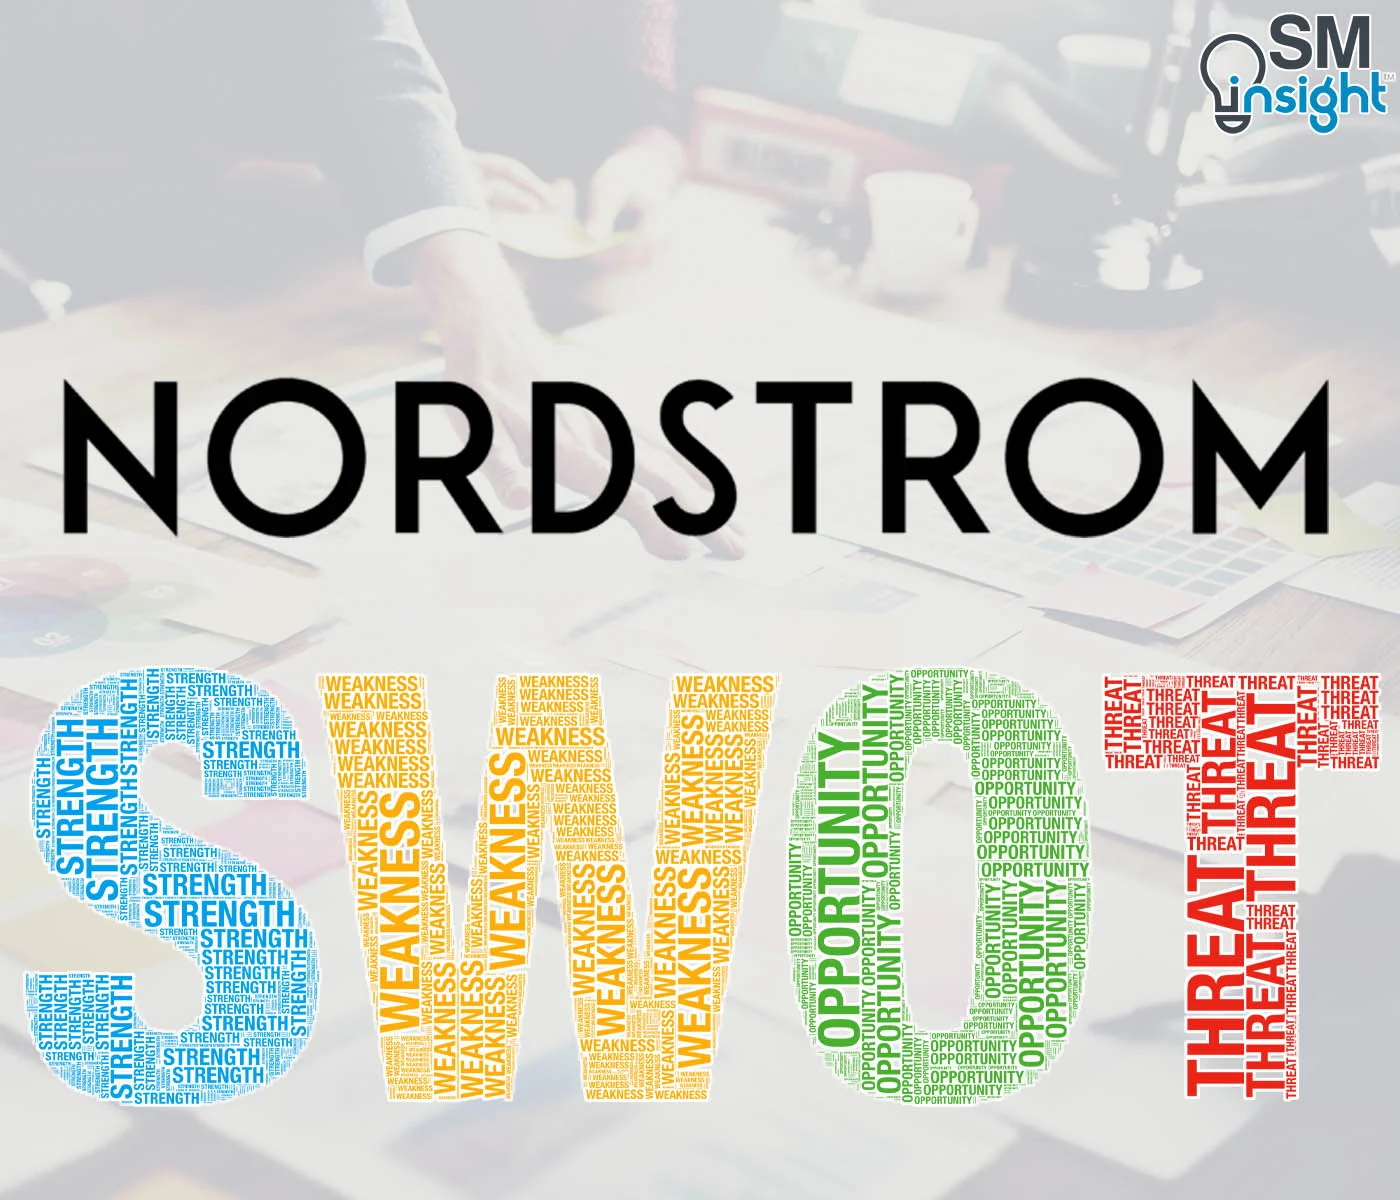 Nordstrom SWOT analysis